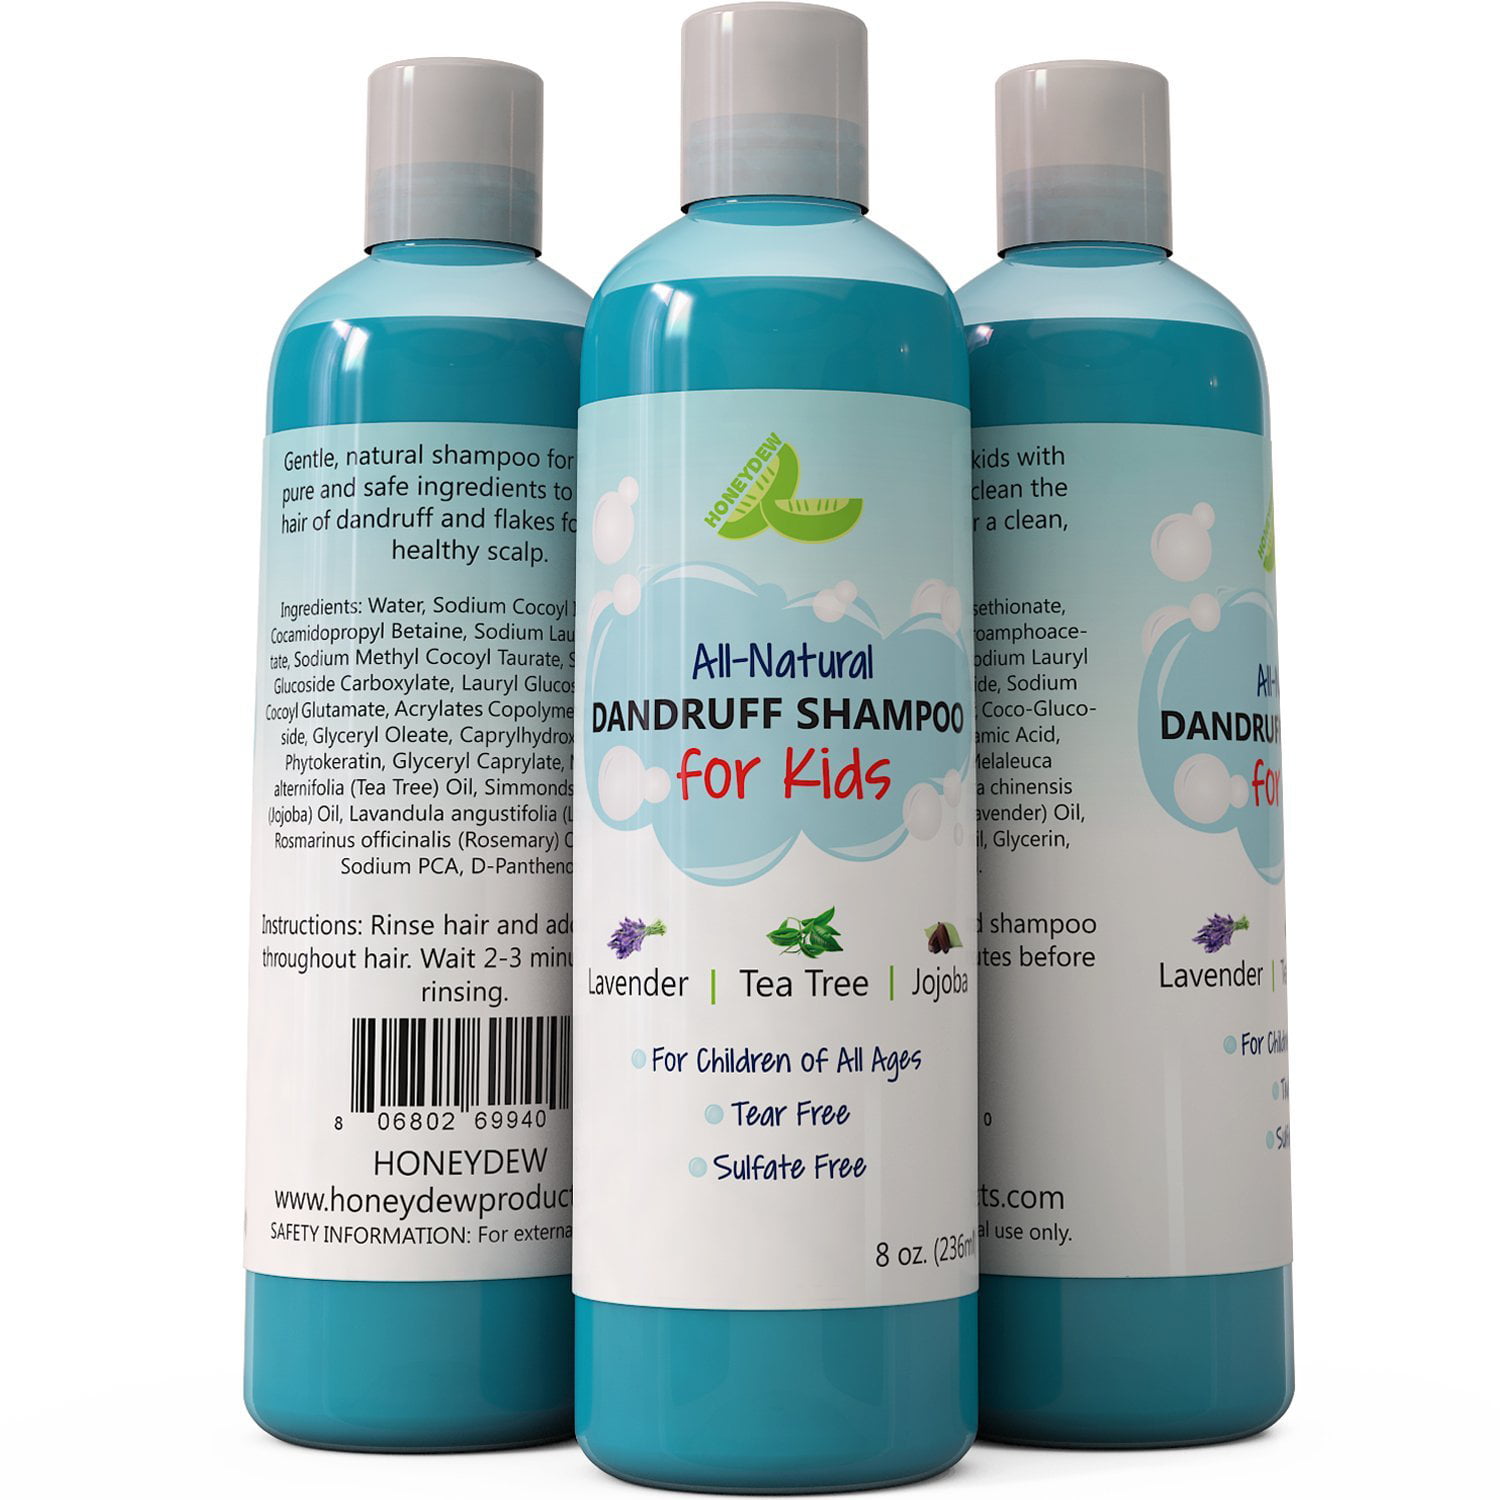 Honeydew Anti Dandruff Shampoo For Kids Best Tear Free Sulfate Free Natural Hair Care Product 8 Oz Walmart Com Walmart Com